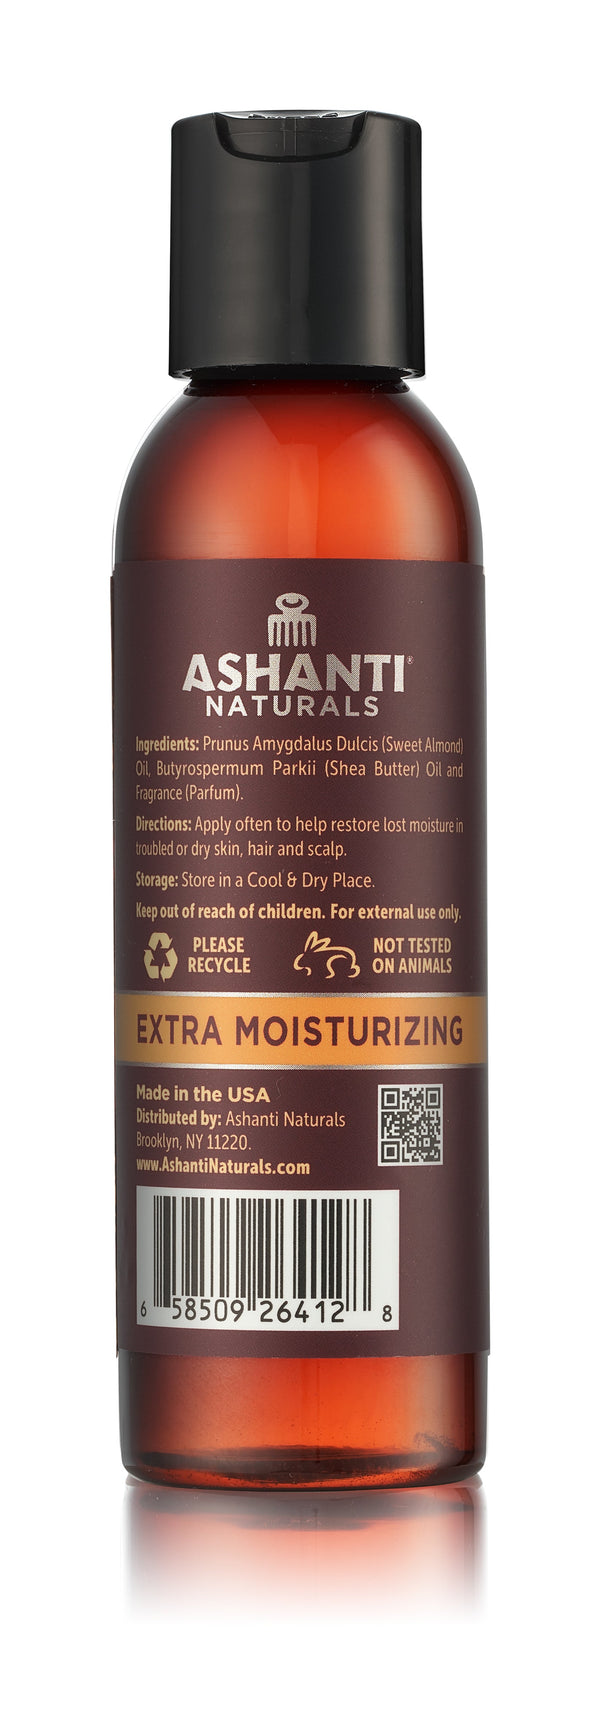 ASHANTI NATURALS 100% SHEA NUT & SWEET ALMOND NATURAL HAIR & BODY OIL- MIDNIGHT AMBER 4 OZ